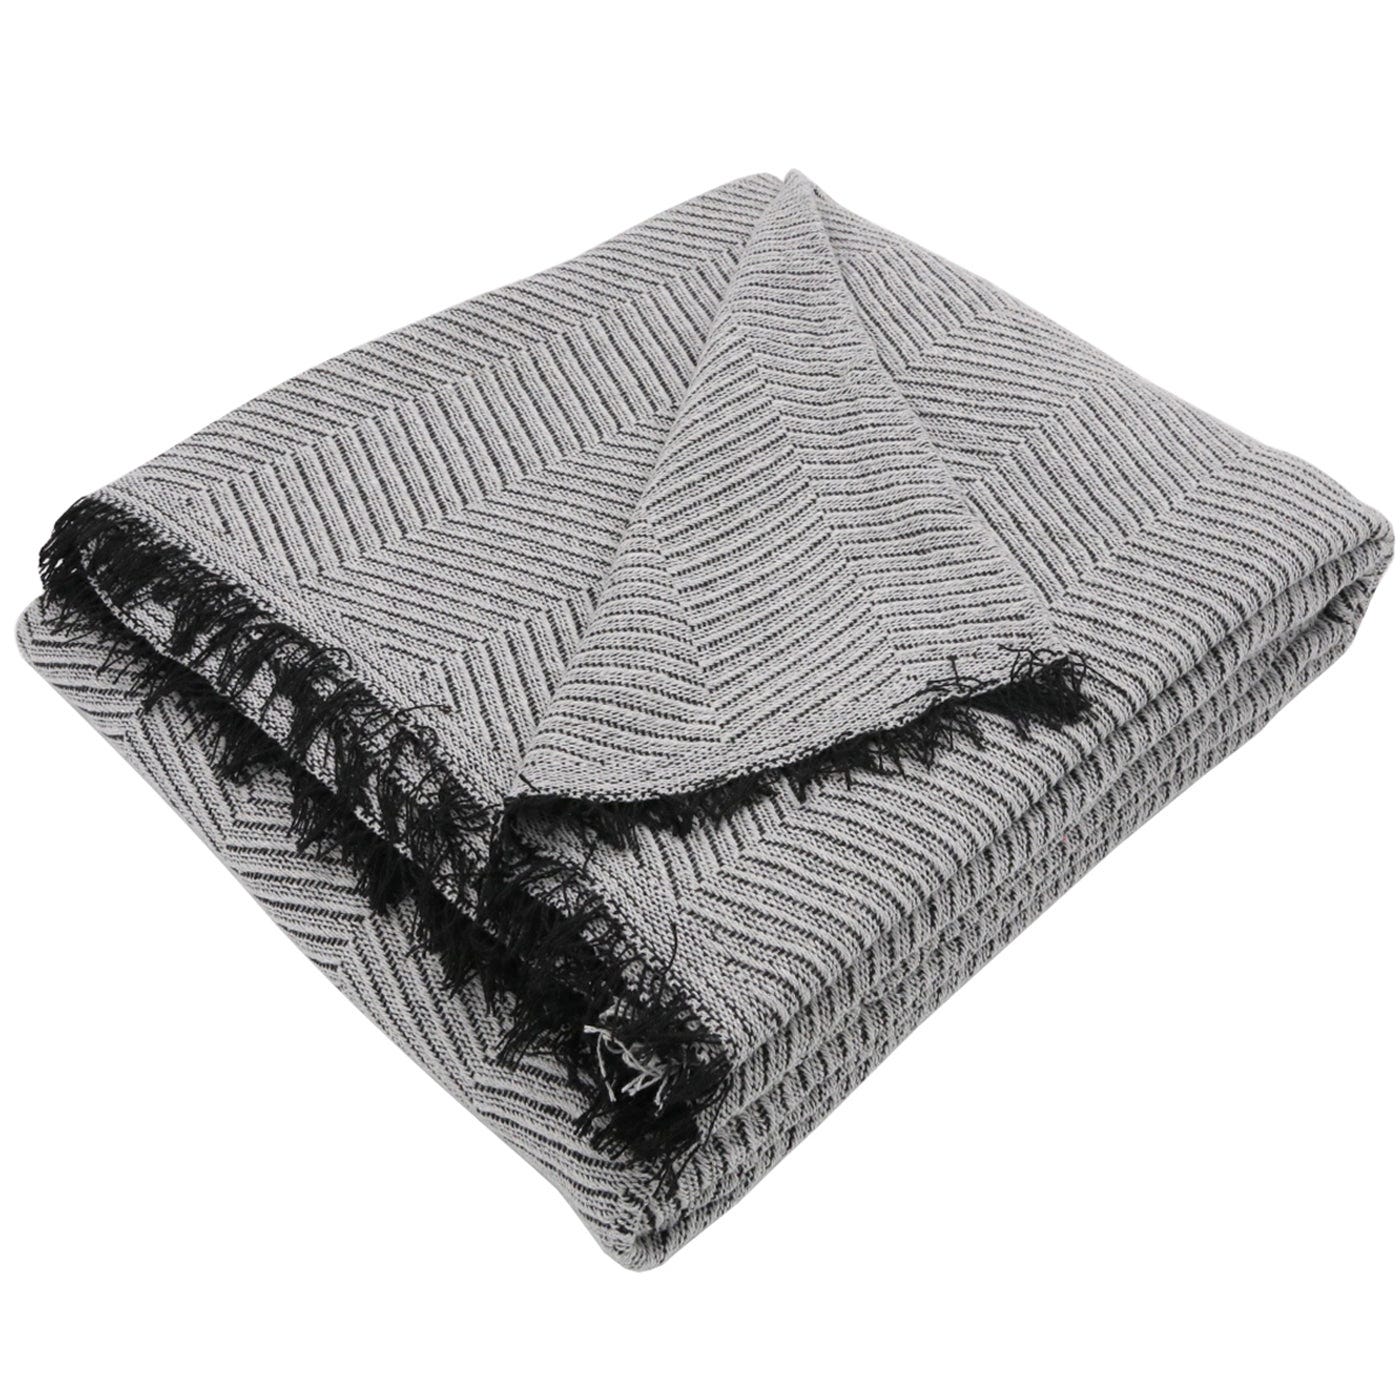 Colcha multiusos algodón Betty Negro 230x260 cm, plaid cama, cubrecama,  jarapa sofá, foulard sofá, cubresofá